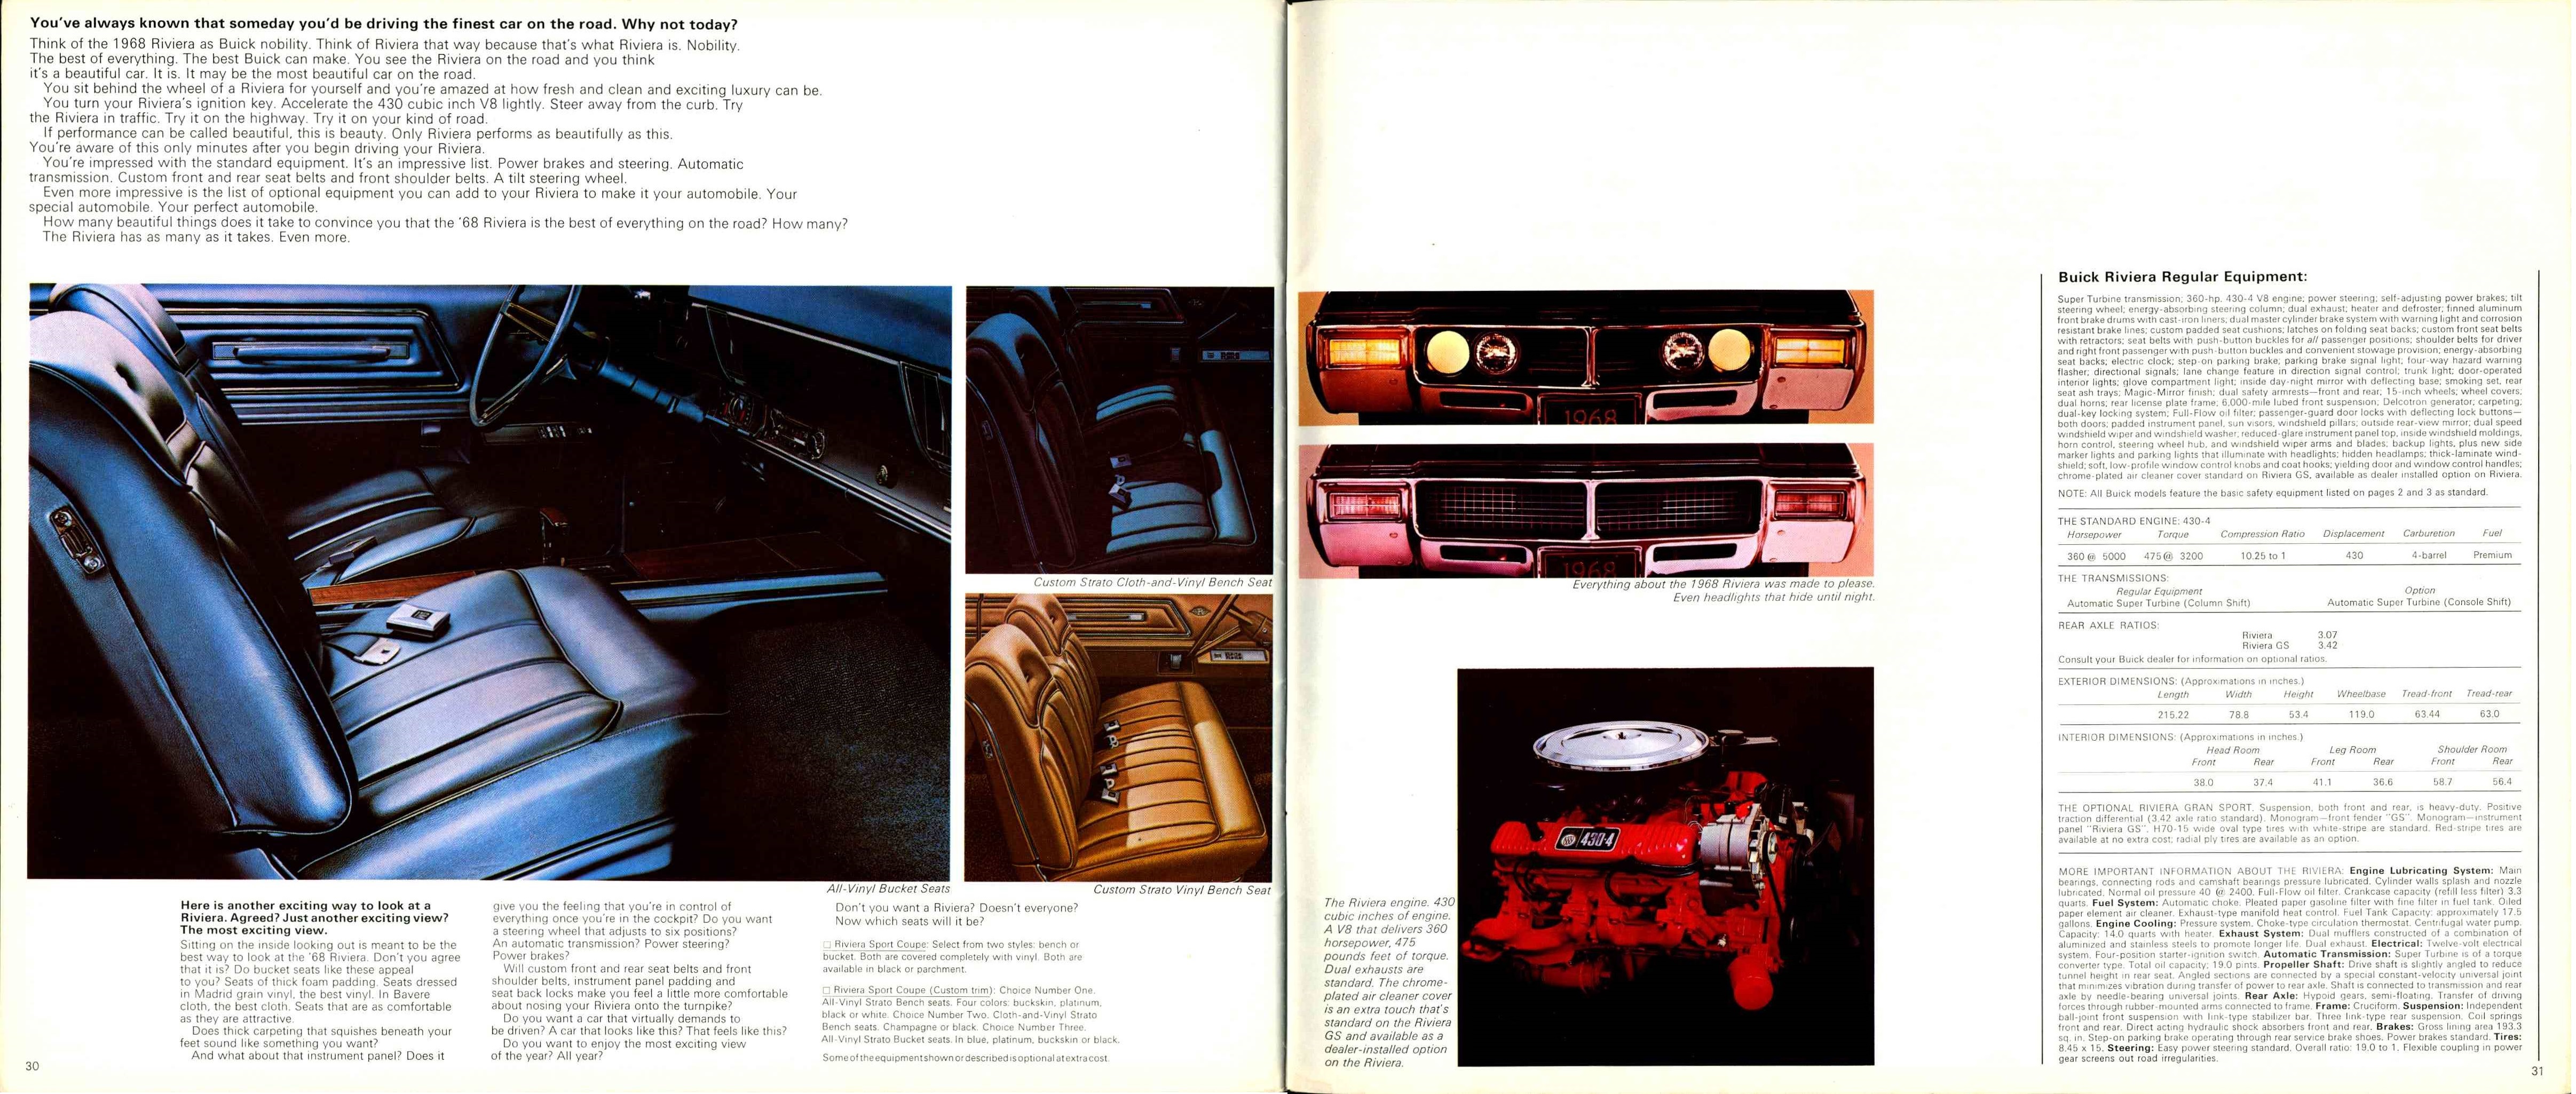 1968 Buick Full Line Brochure Canada 30-31